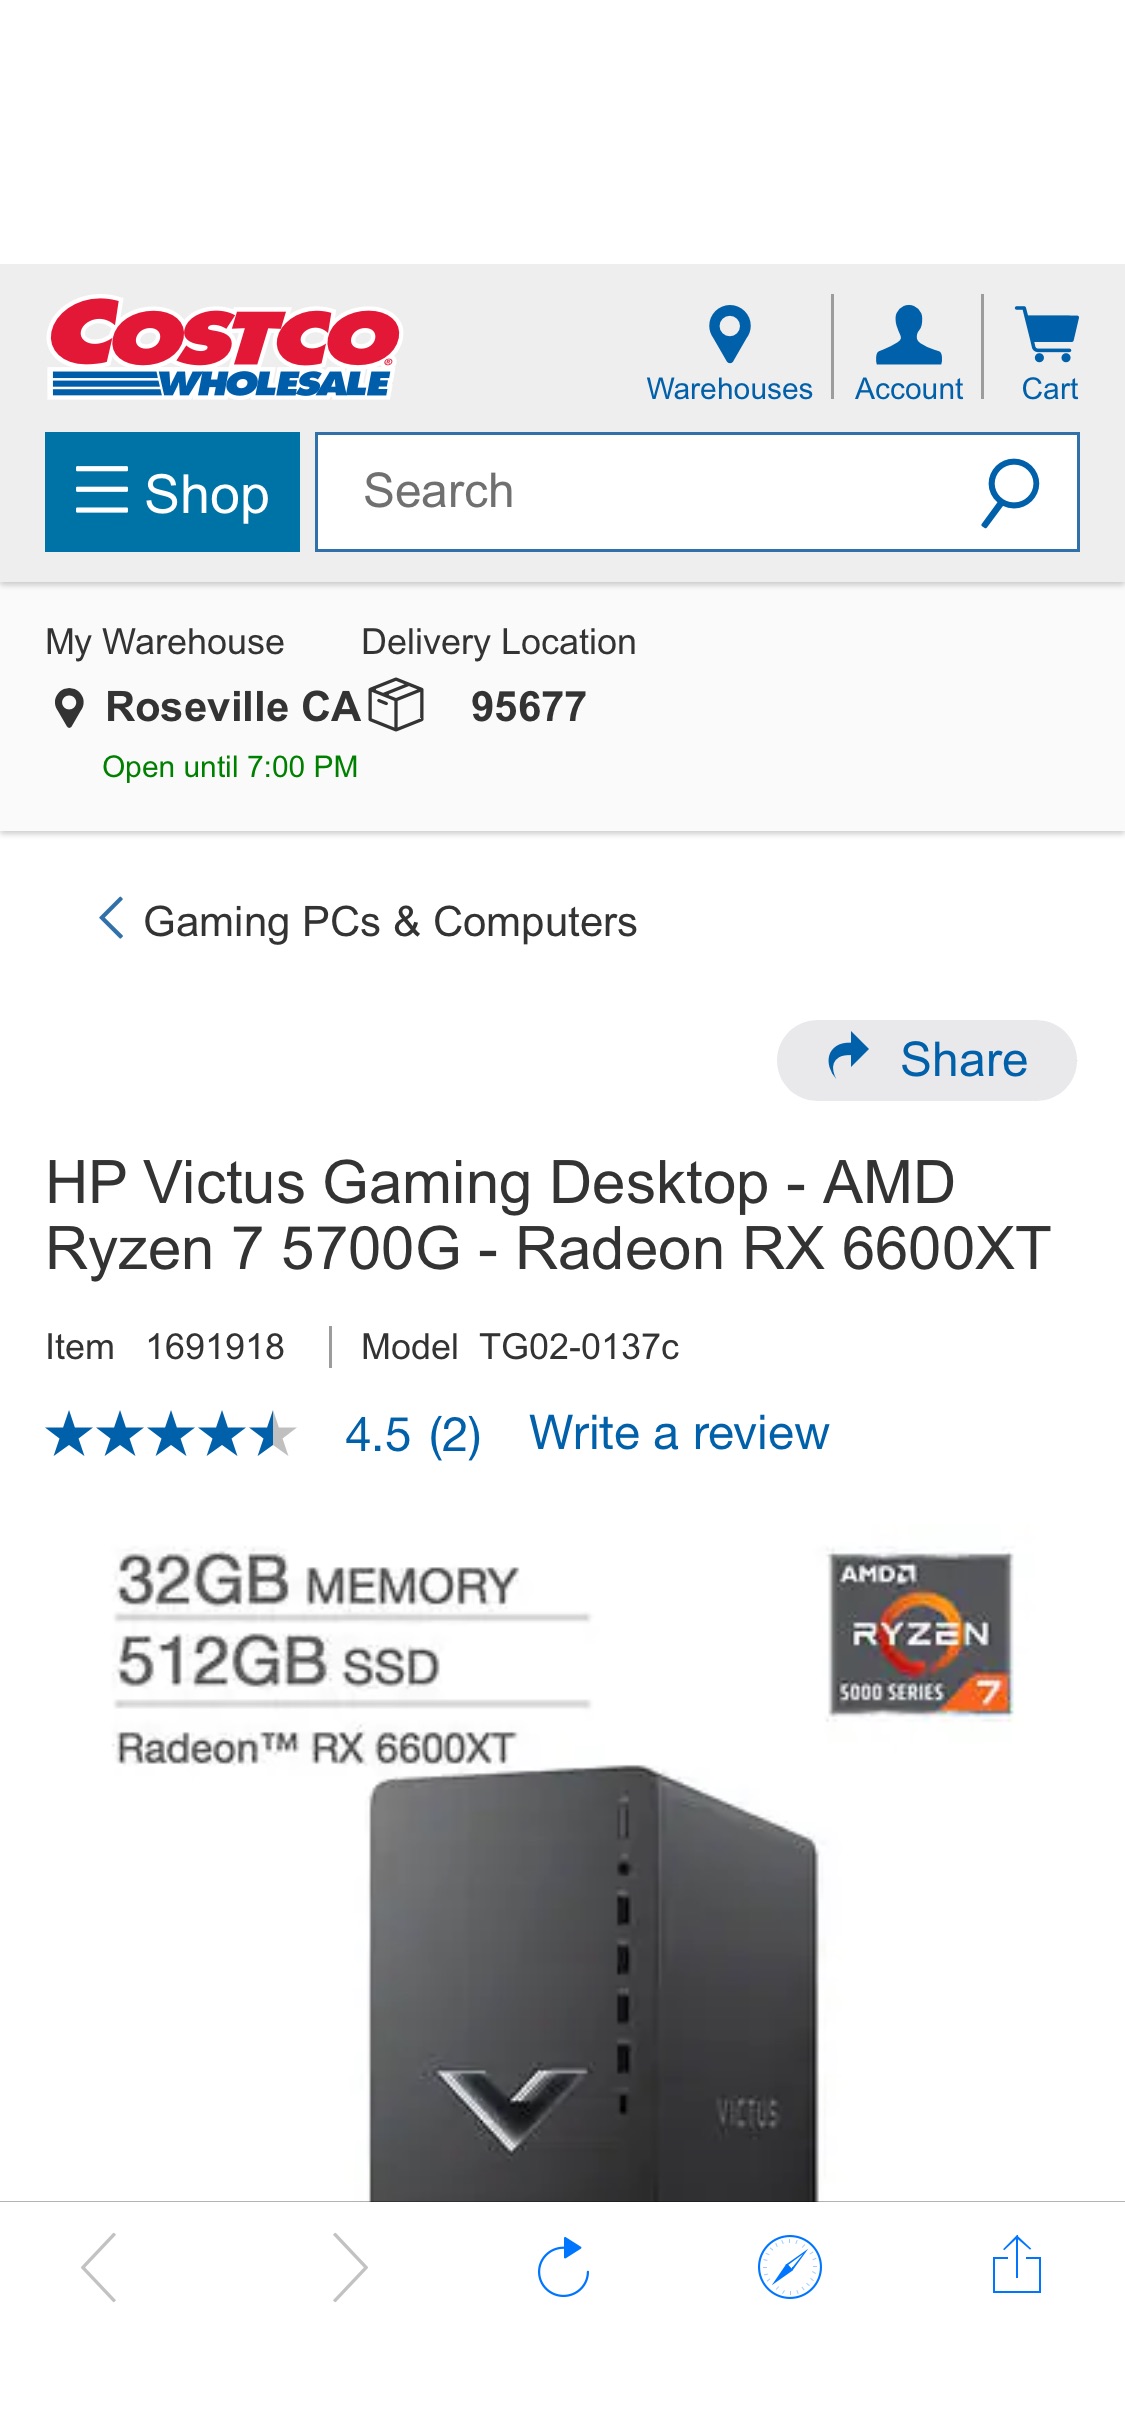 HP Victus Gaming Desktop - AMD Ryzen 7 5700G - Radeon RX 6600XT | Costco